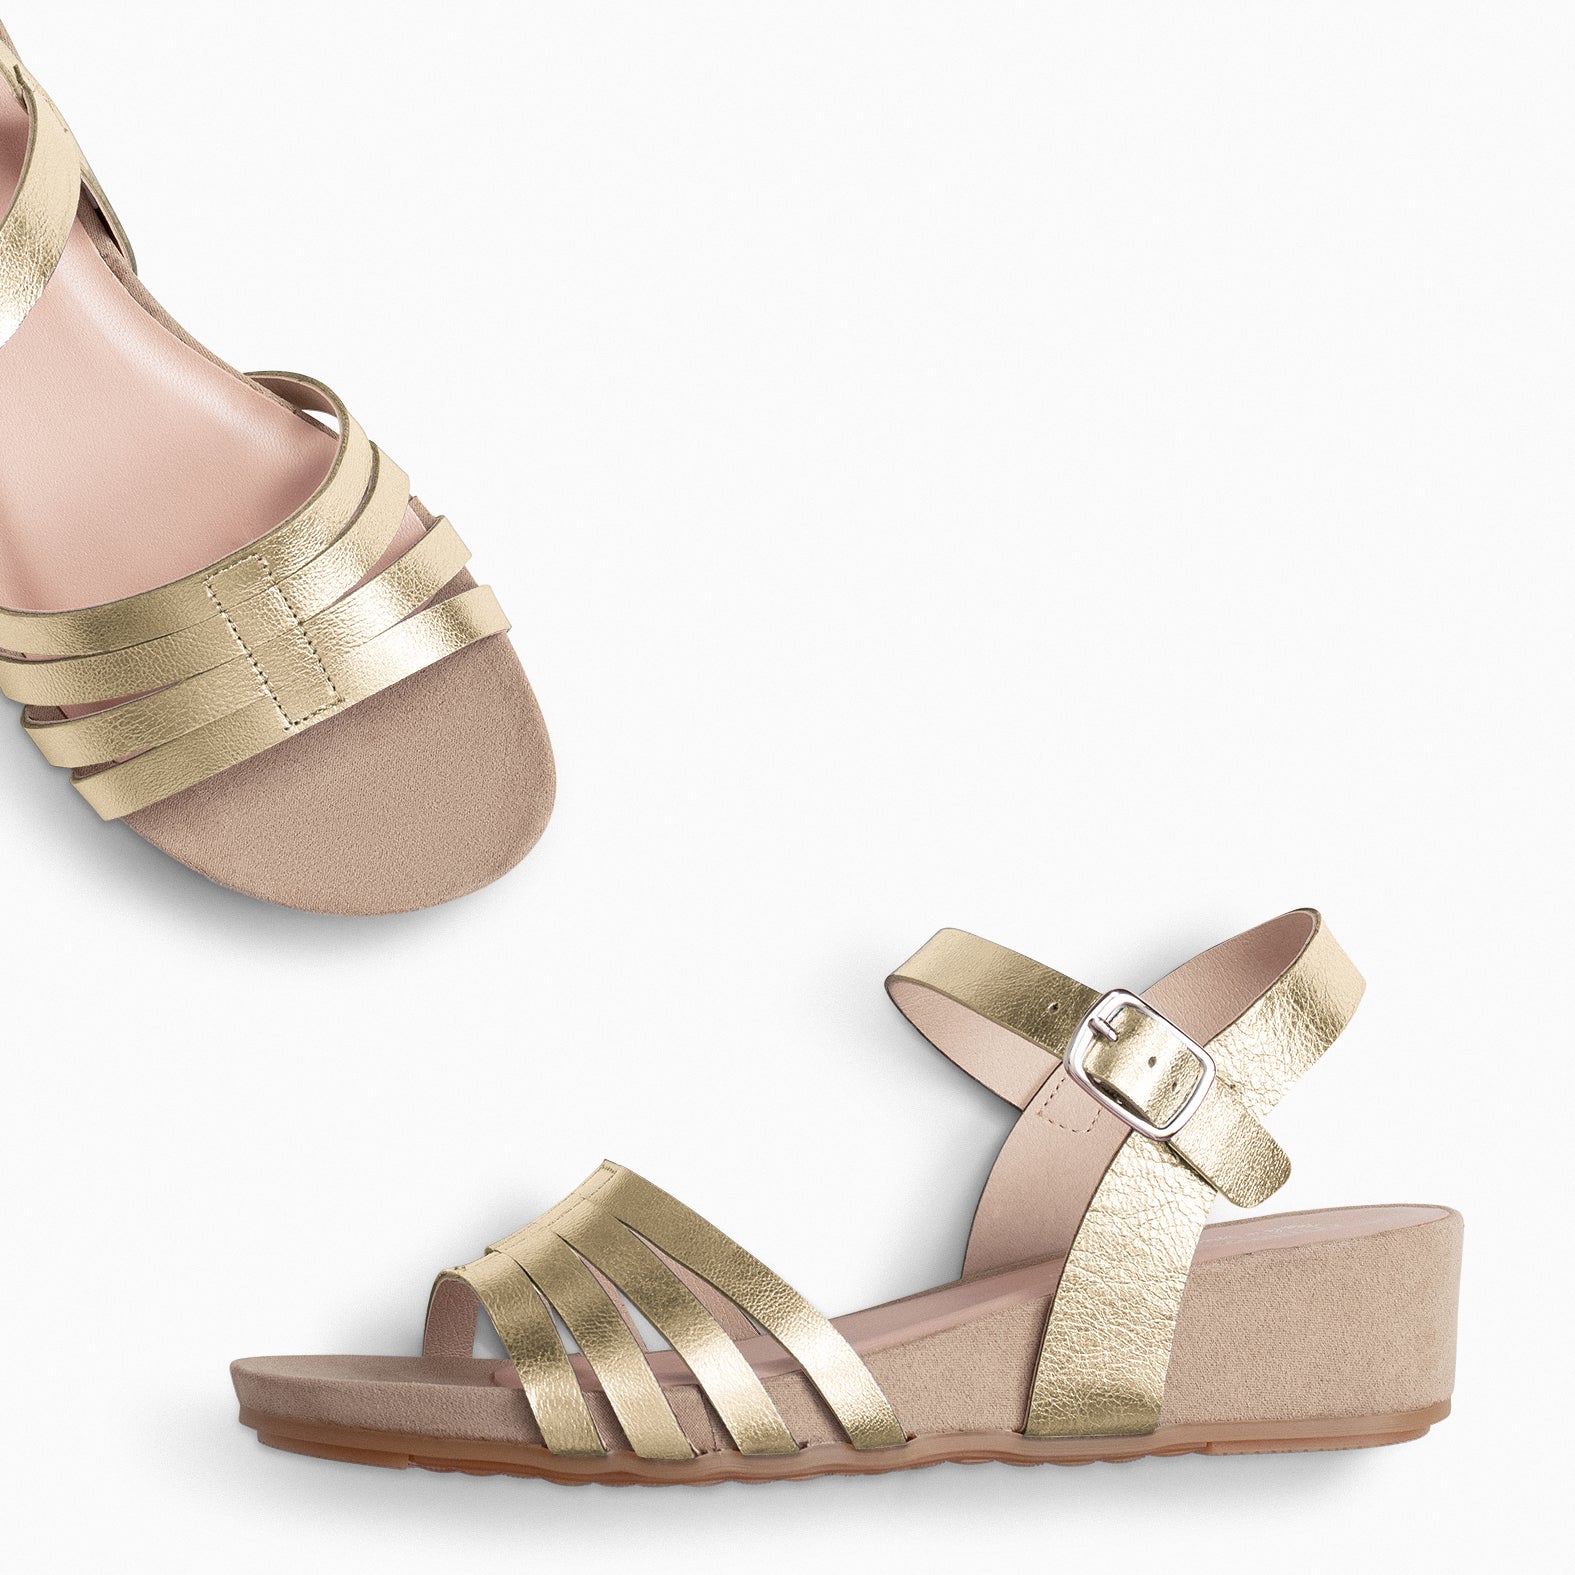 MESINA – GOLDEN Wedge sandal with metallic straps 